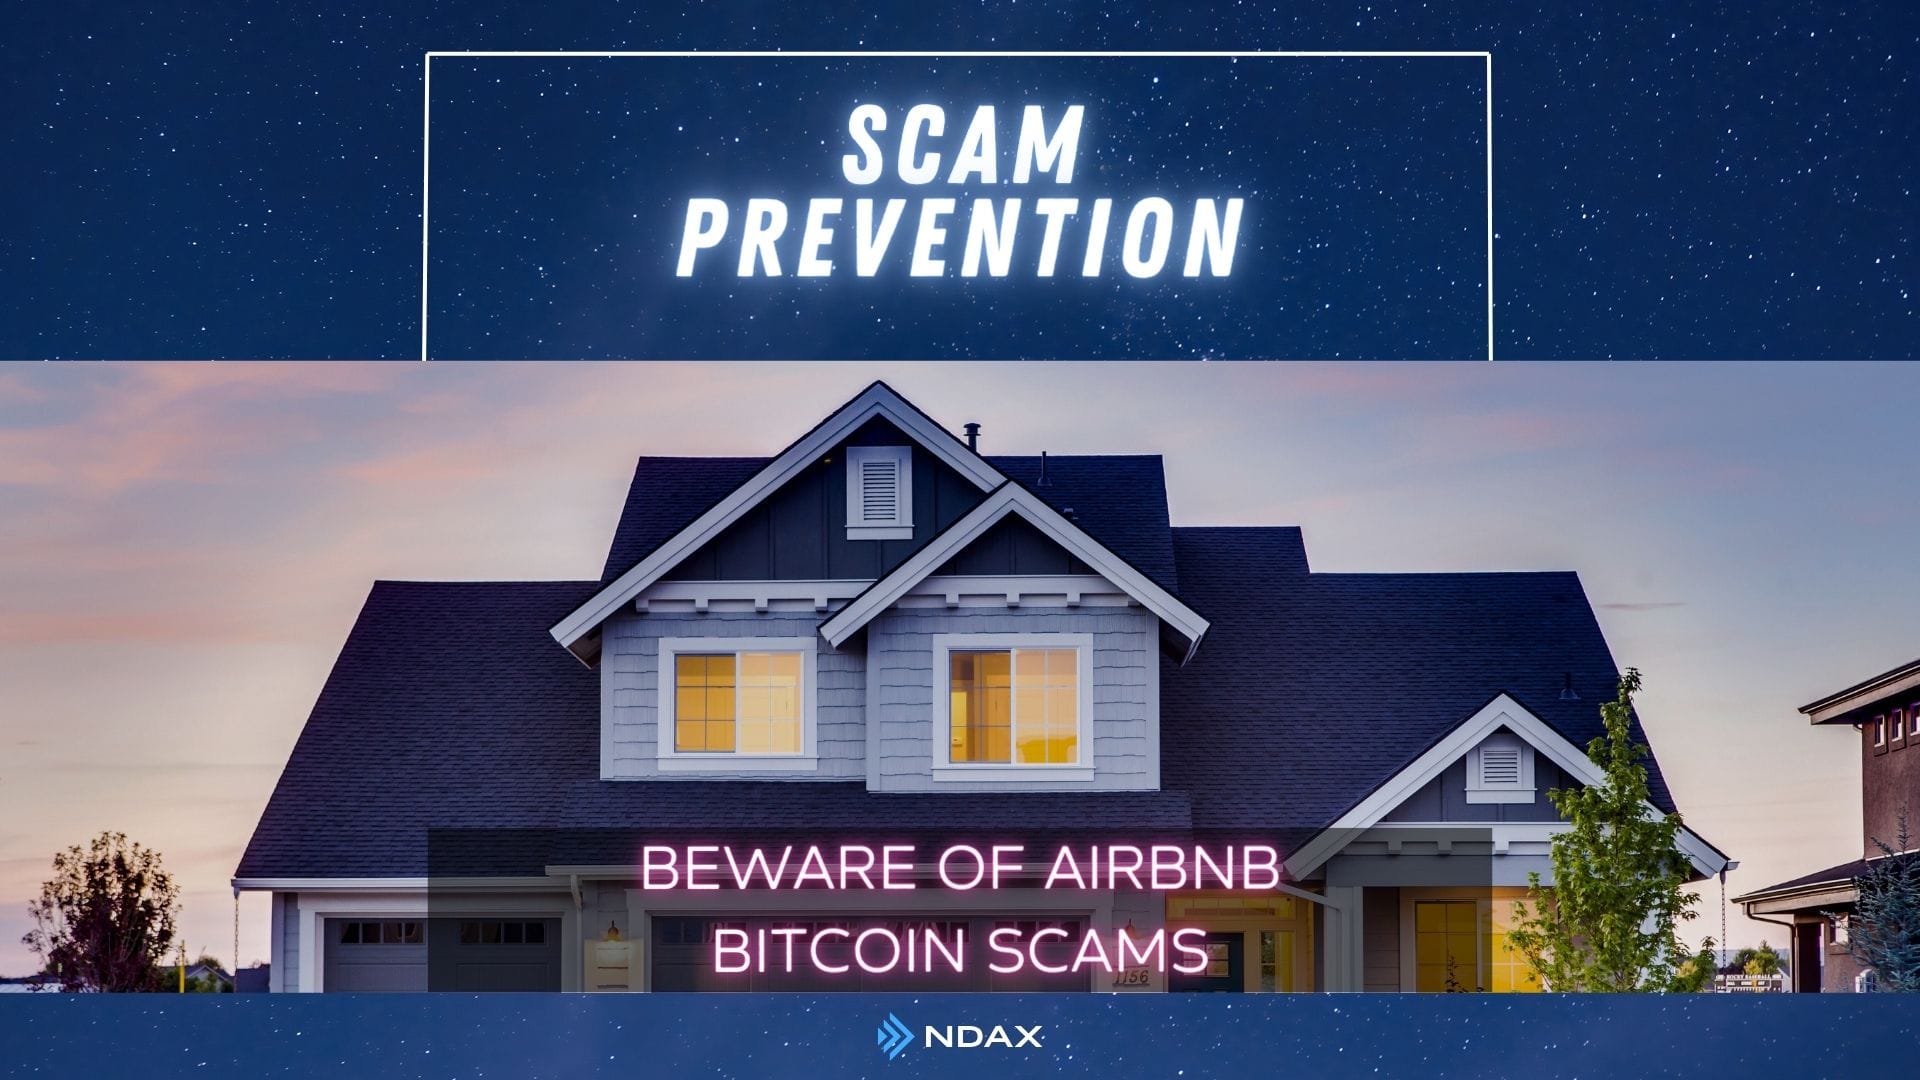 Scam Prevention - Airbnb Bitcoin Scam